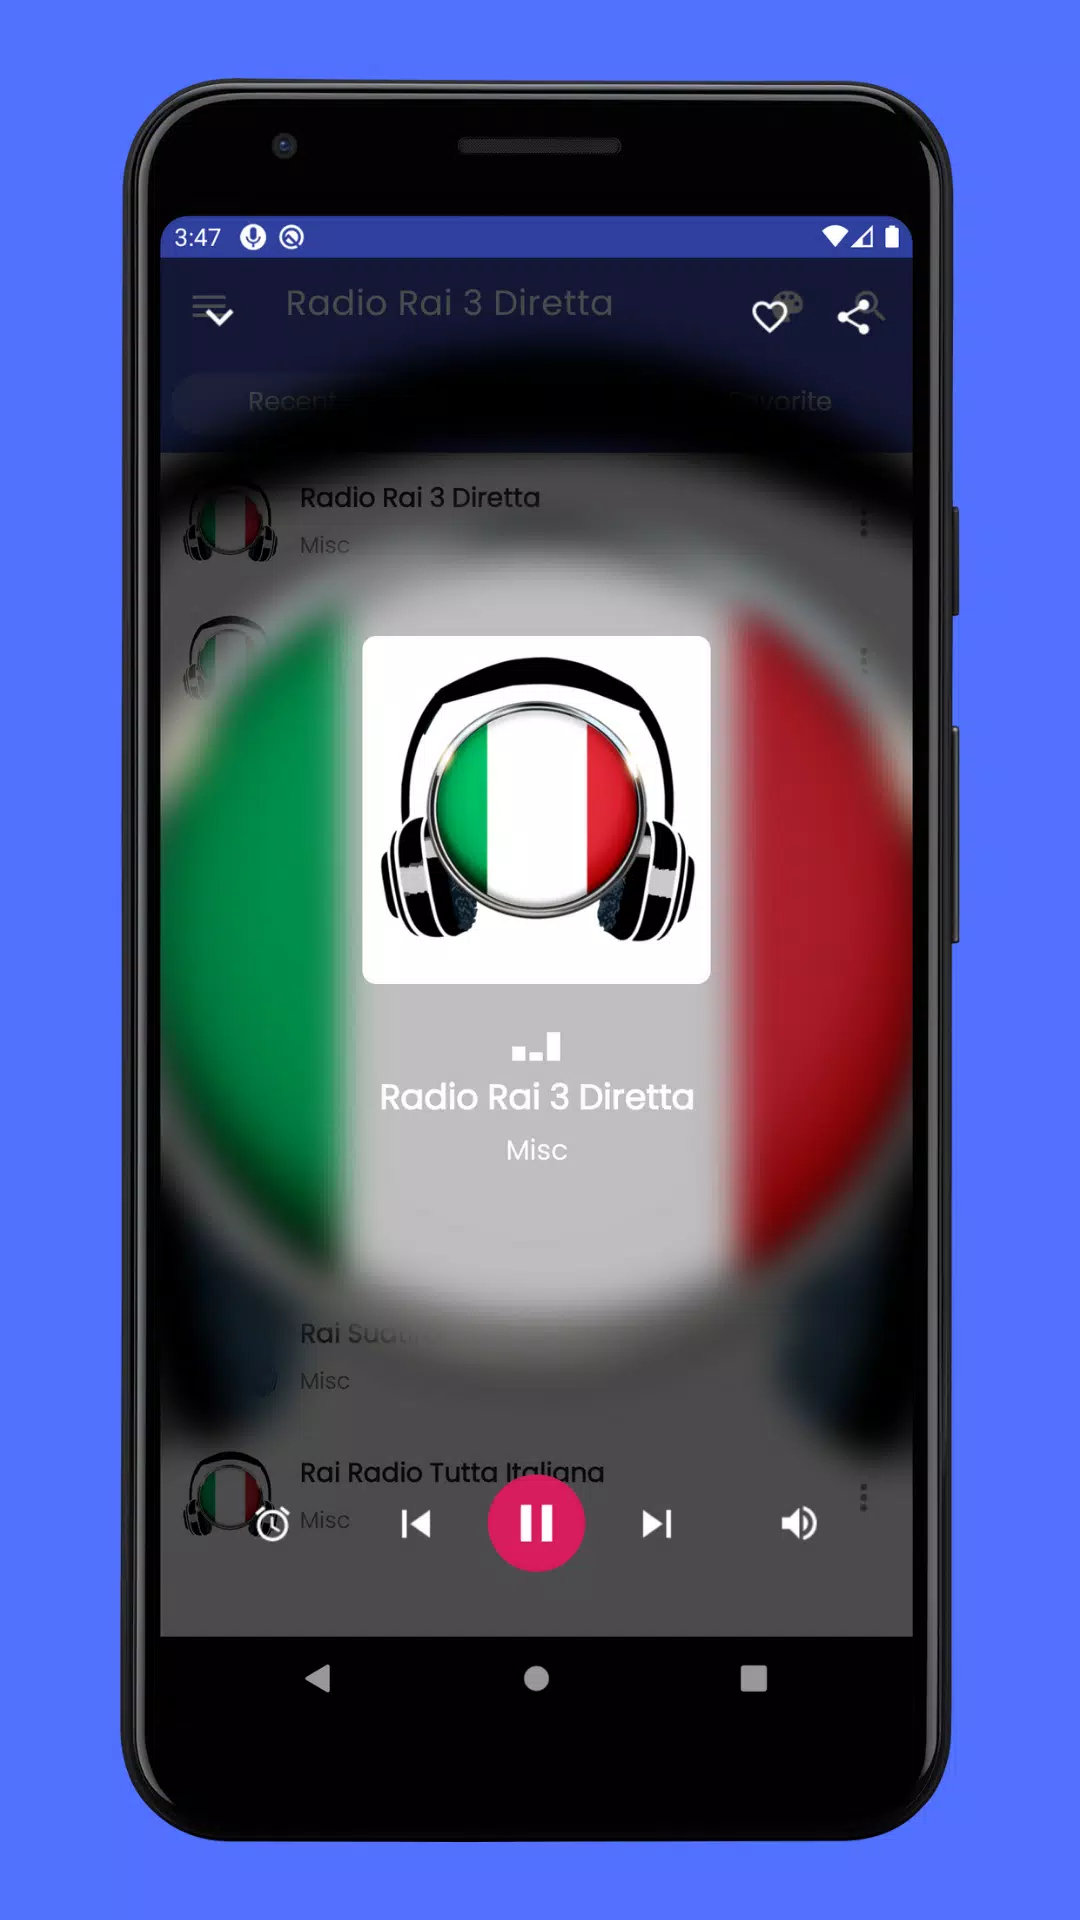 Radio Rai 3 Diretta APK for Android Download